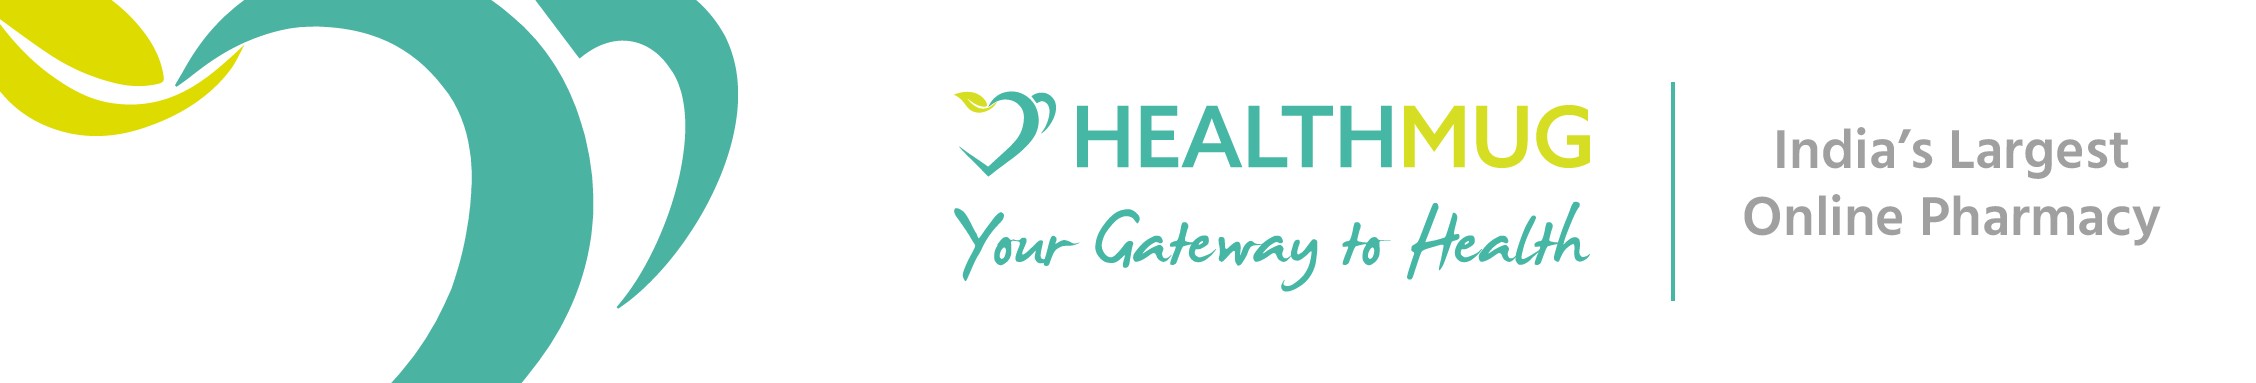 healthmug | linkedin